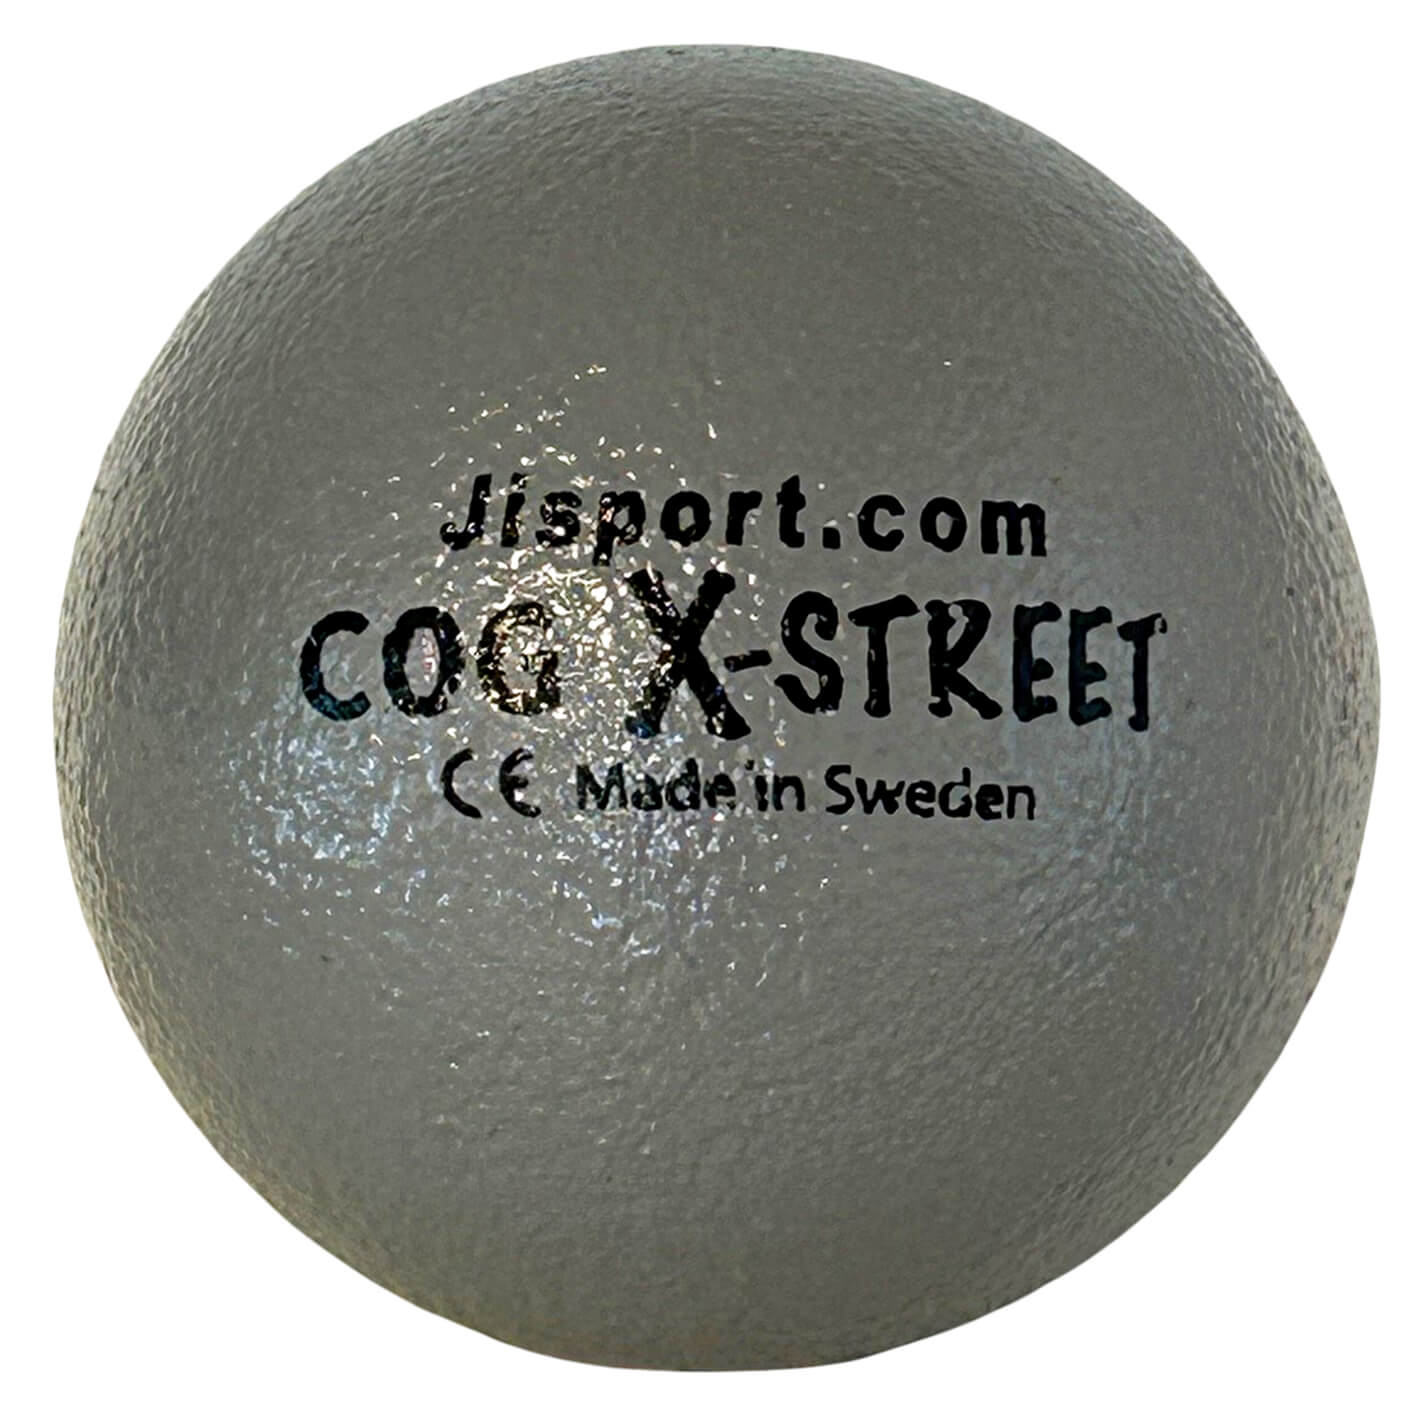 COG X-street